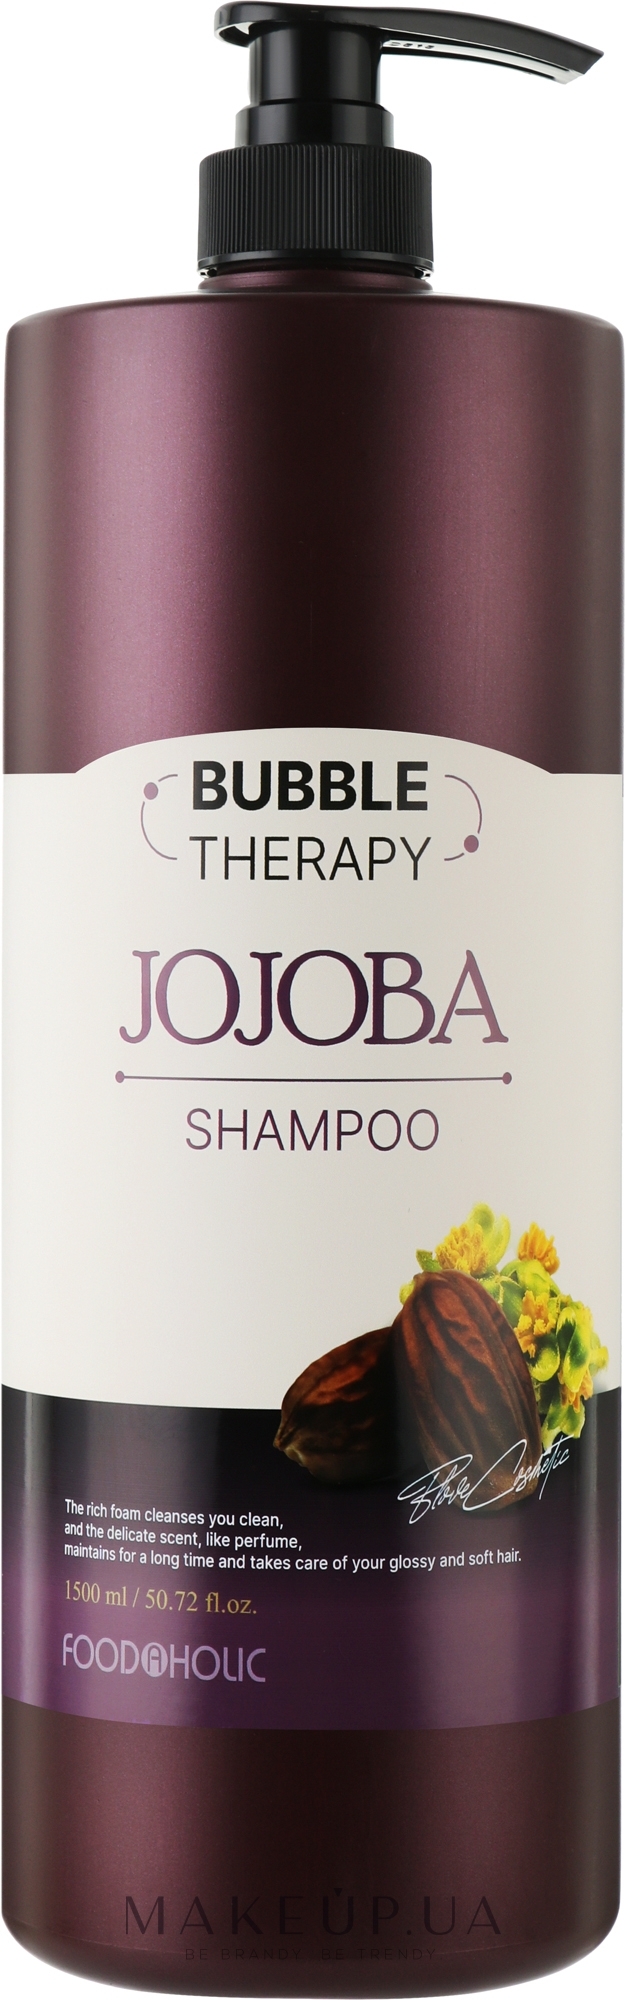 Шампунь для волос с экстрактом жожоба - Food a Holic Bubble Therapy Jojoba Shampoo — фото 1500ml